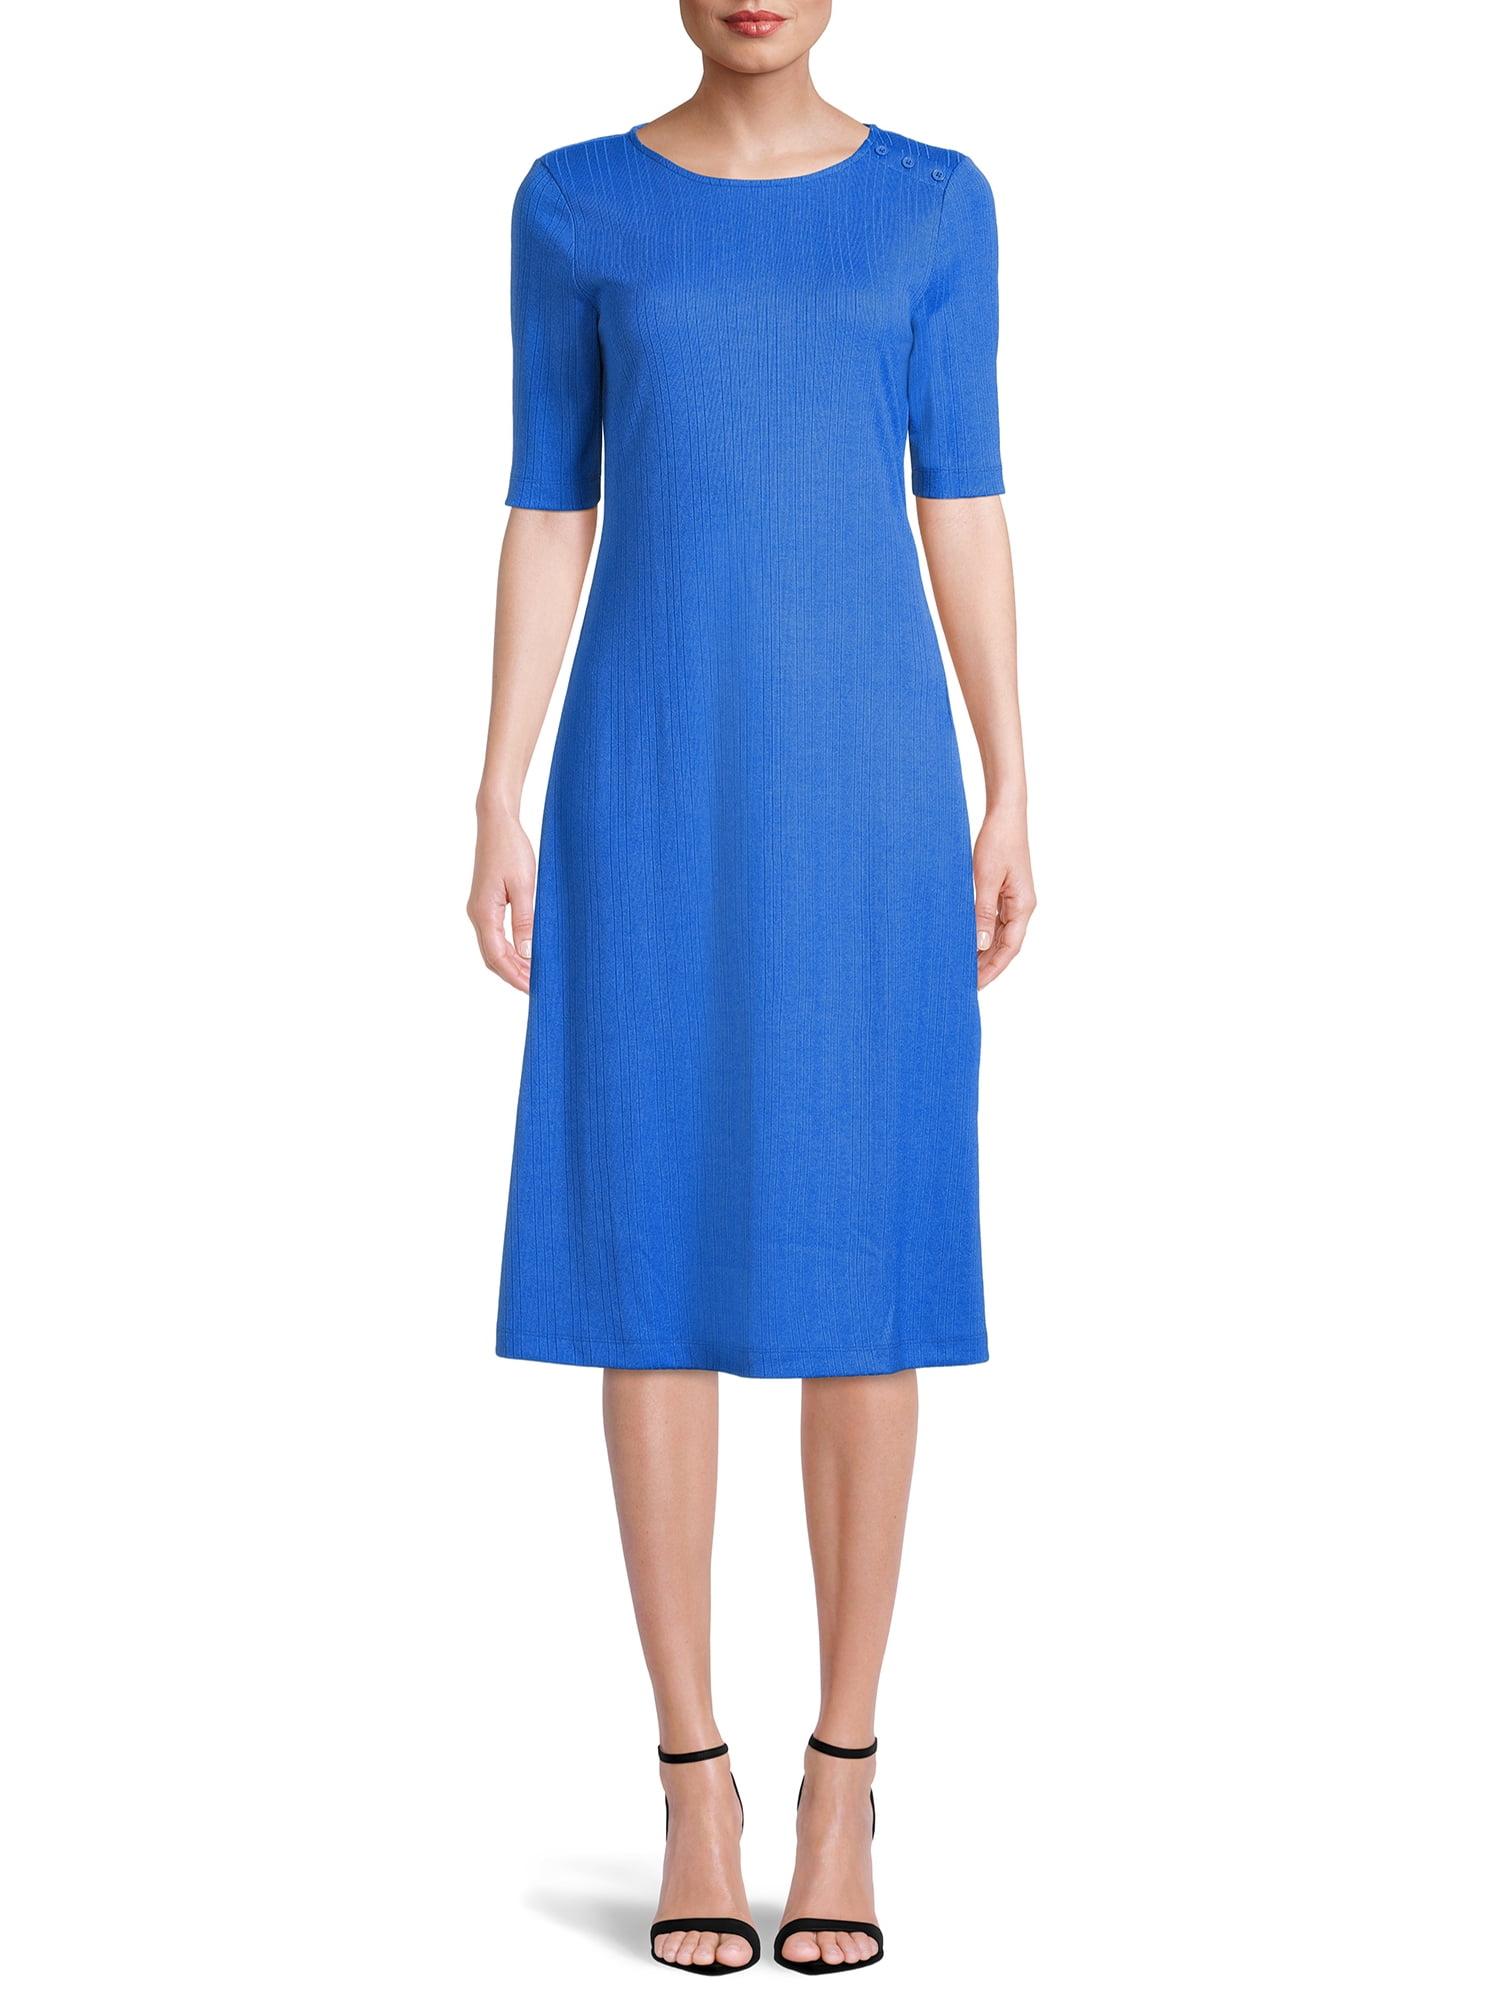 The Get Women's Short Sleeve Rib Dress - Walmart.com